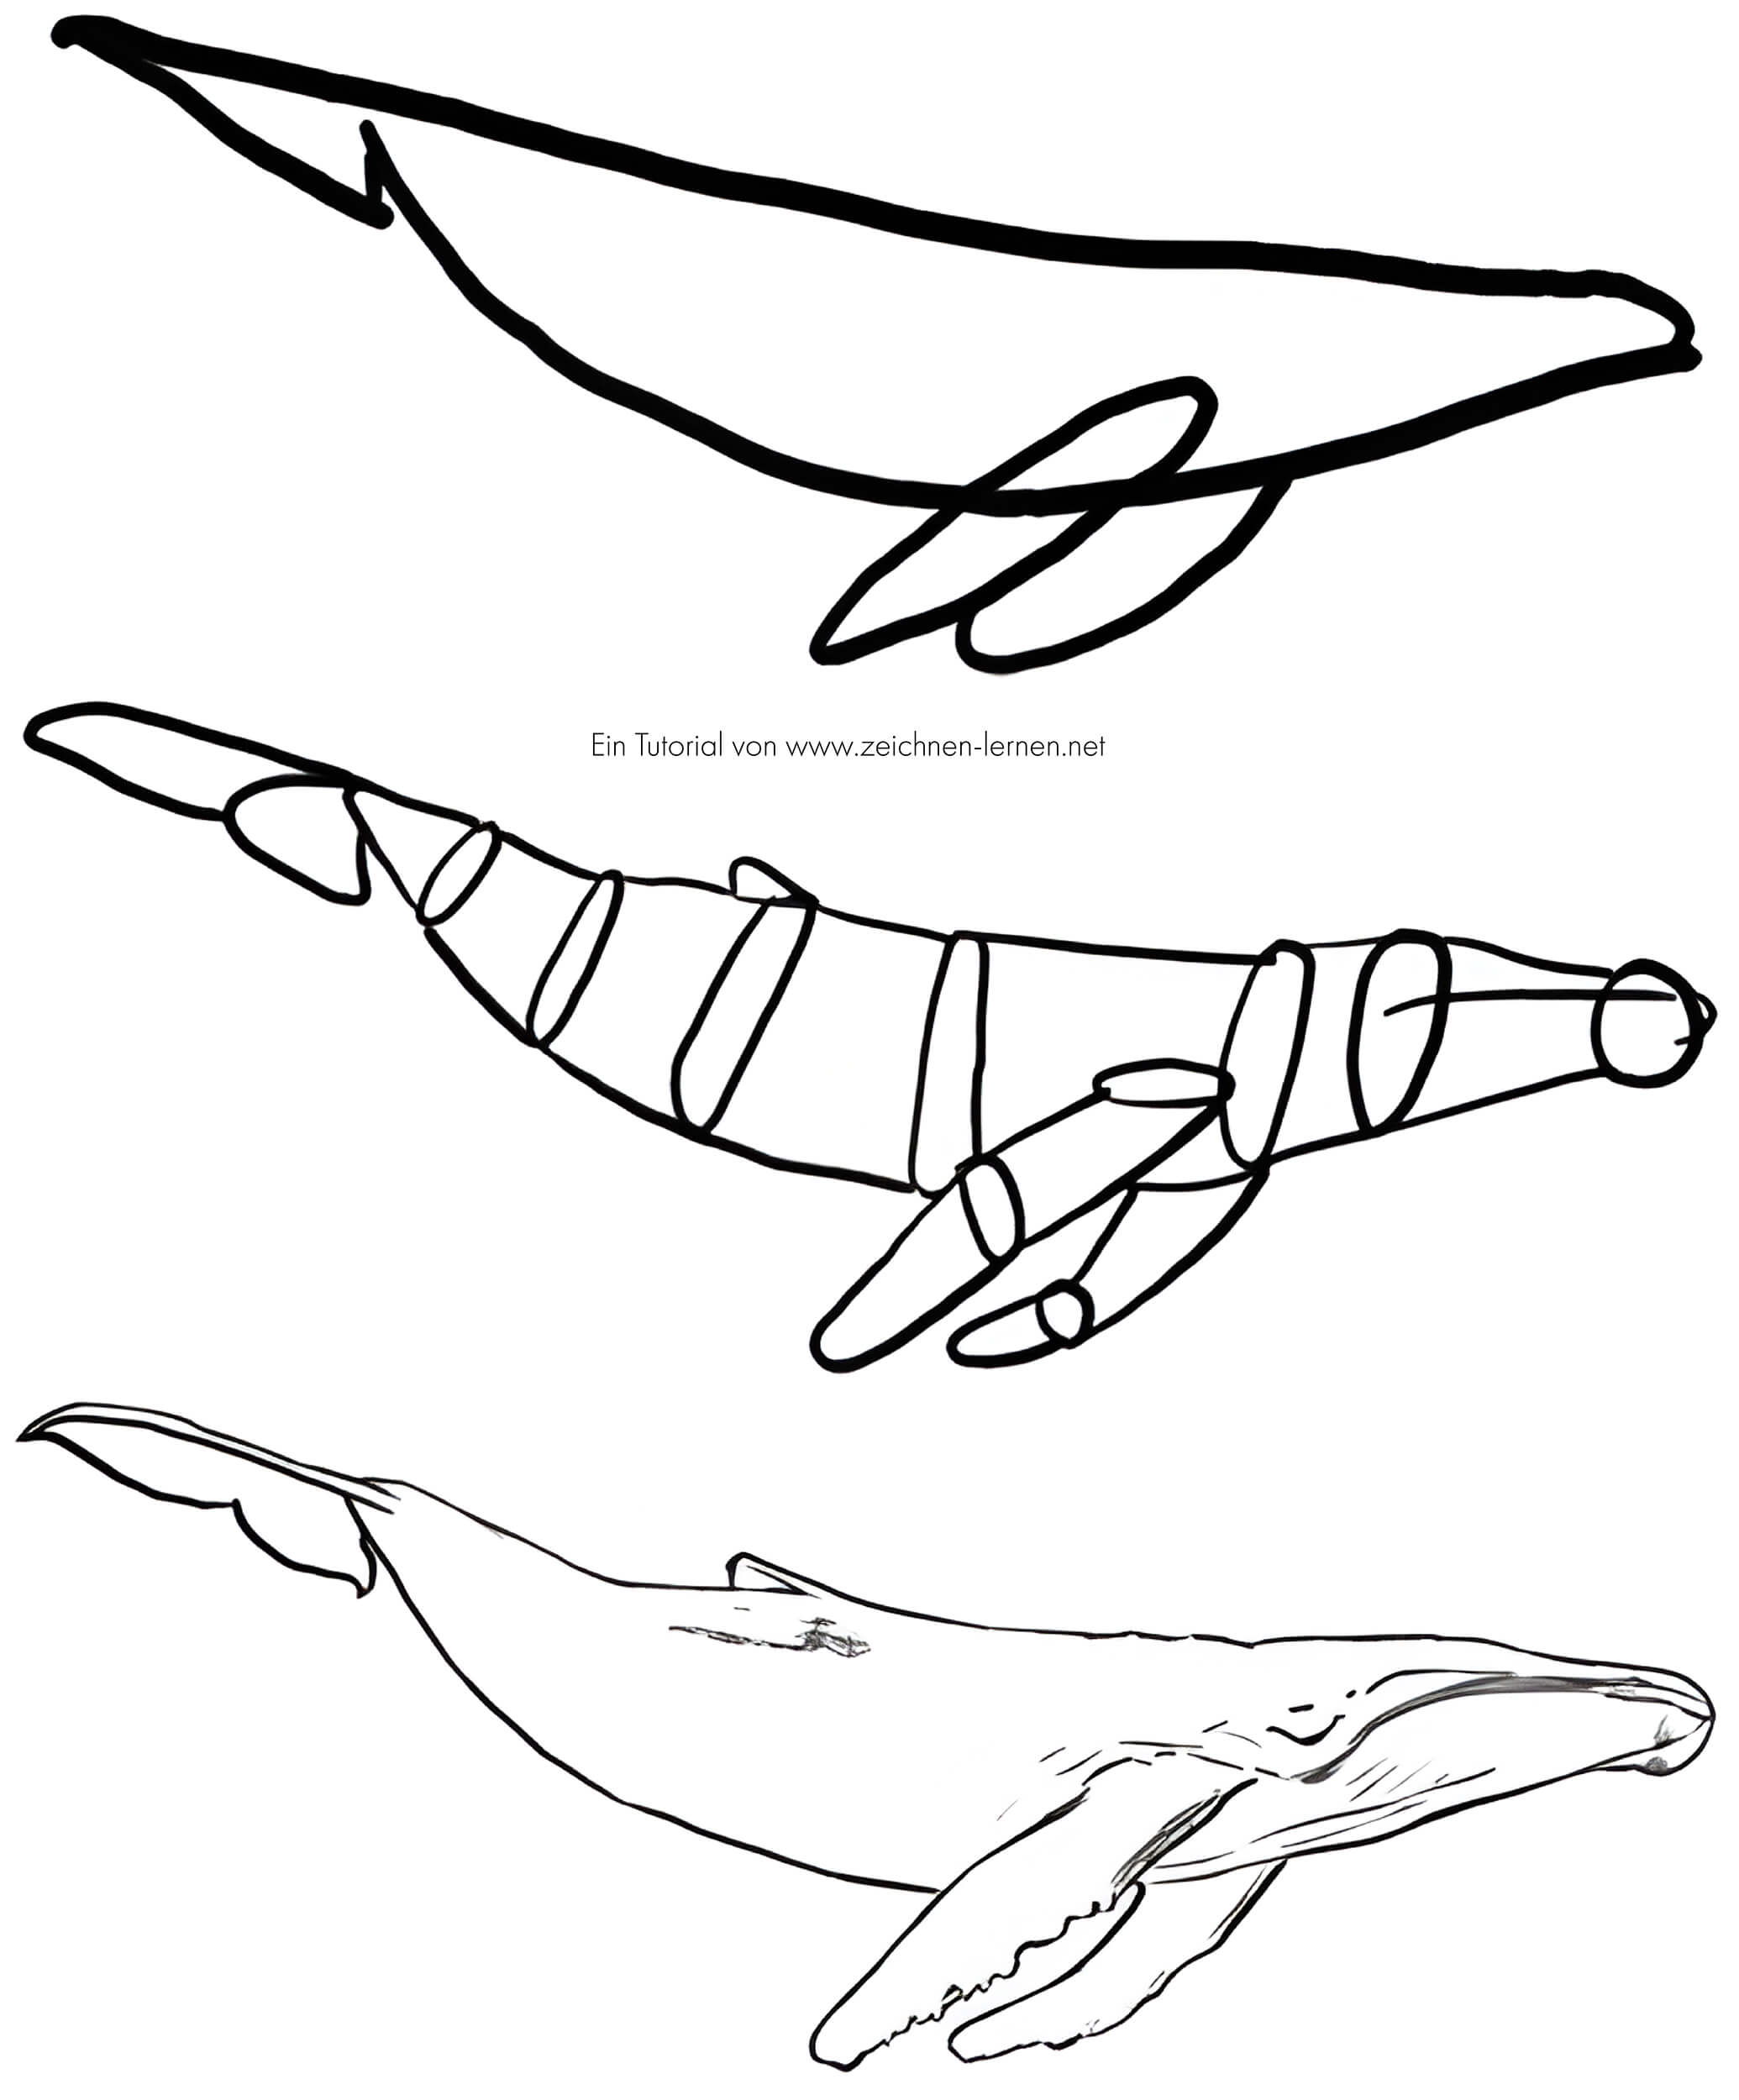 Tutorial de dibujo de ballena jorobada